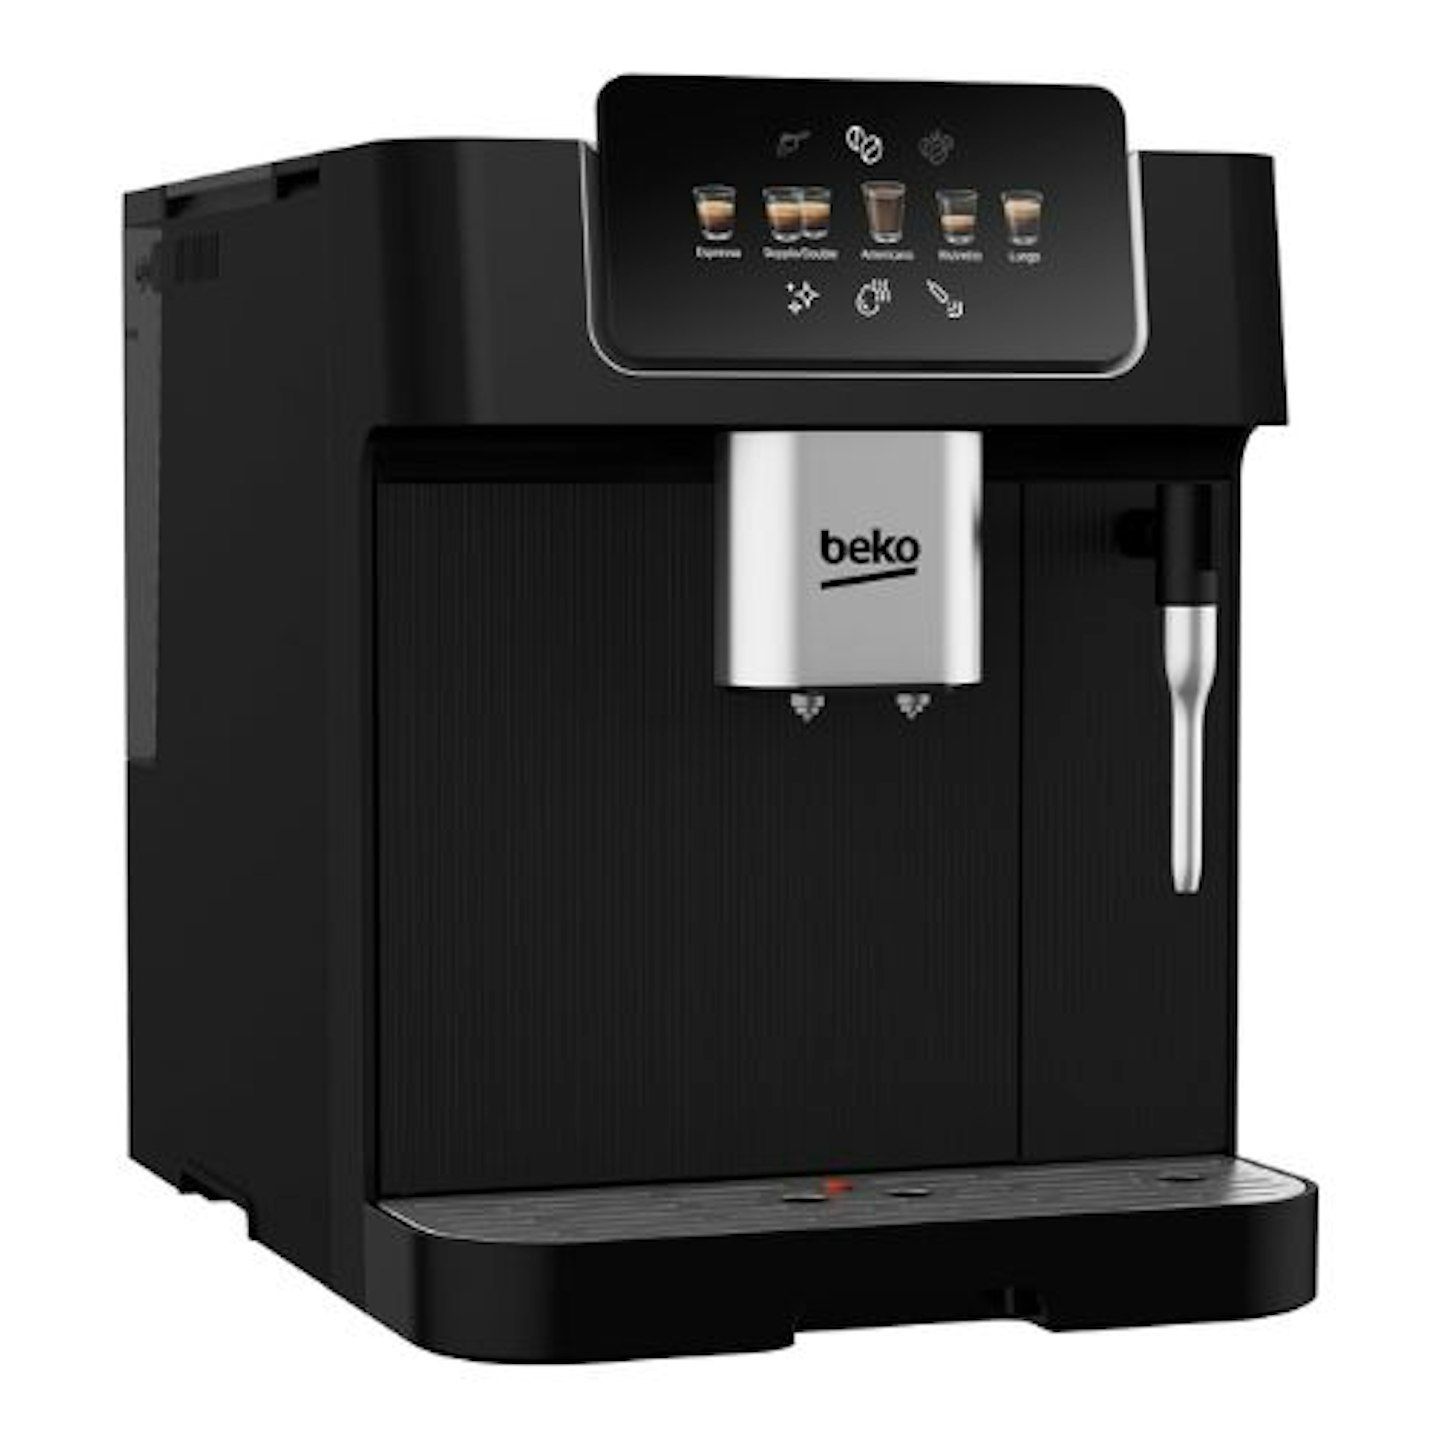 Beko CaffeExperto Bean to Cup Coffee Machine